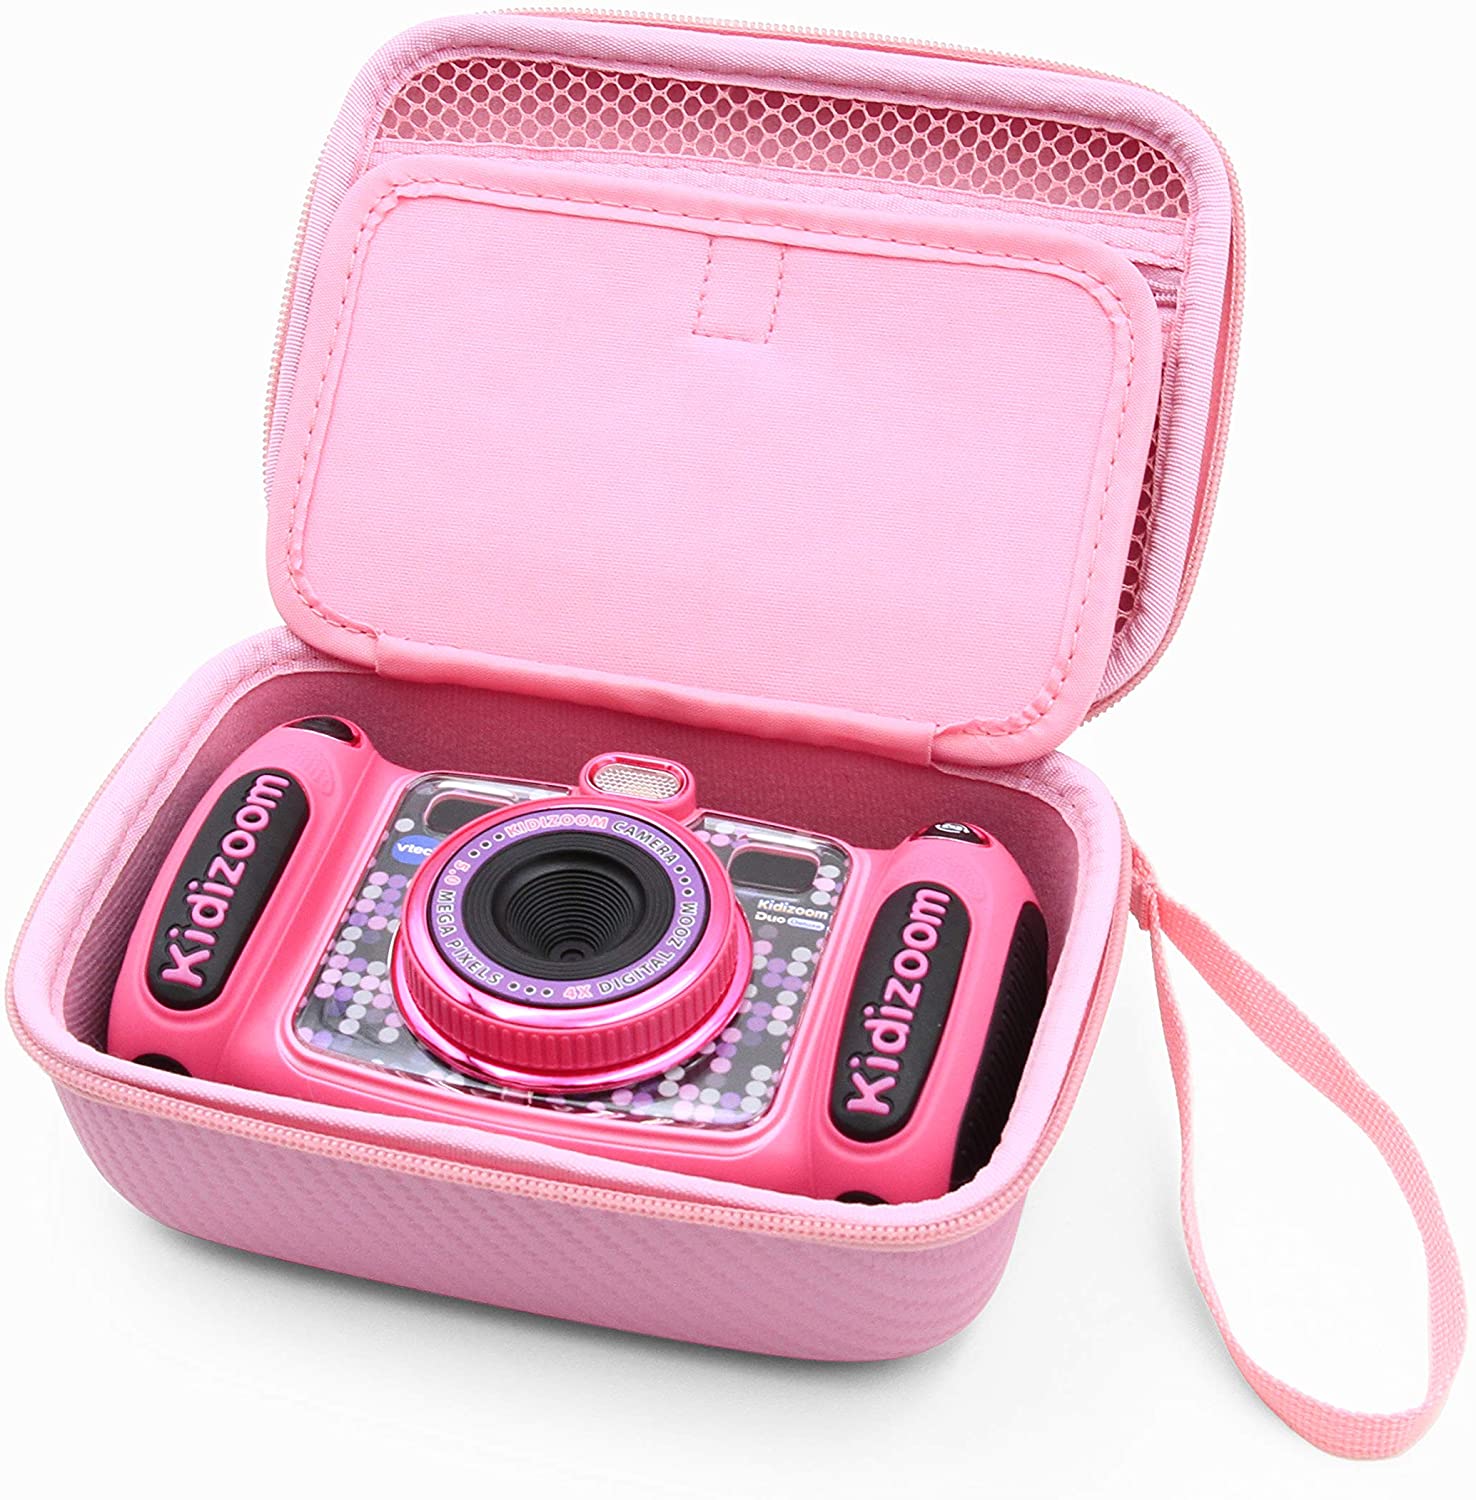 Vtech Kidizoom Digital Camera Twist in Pink 